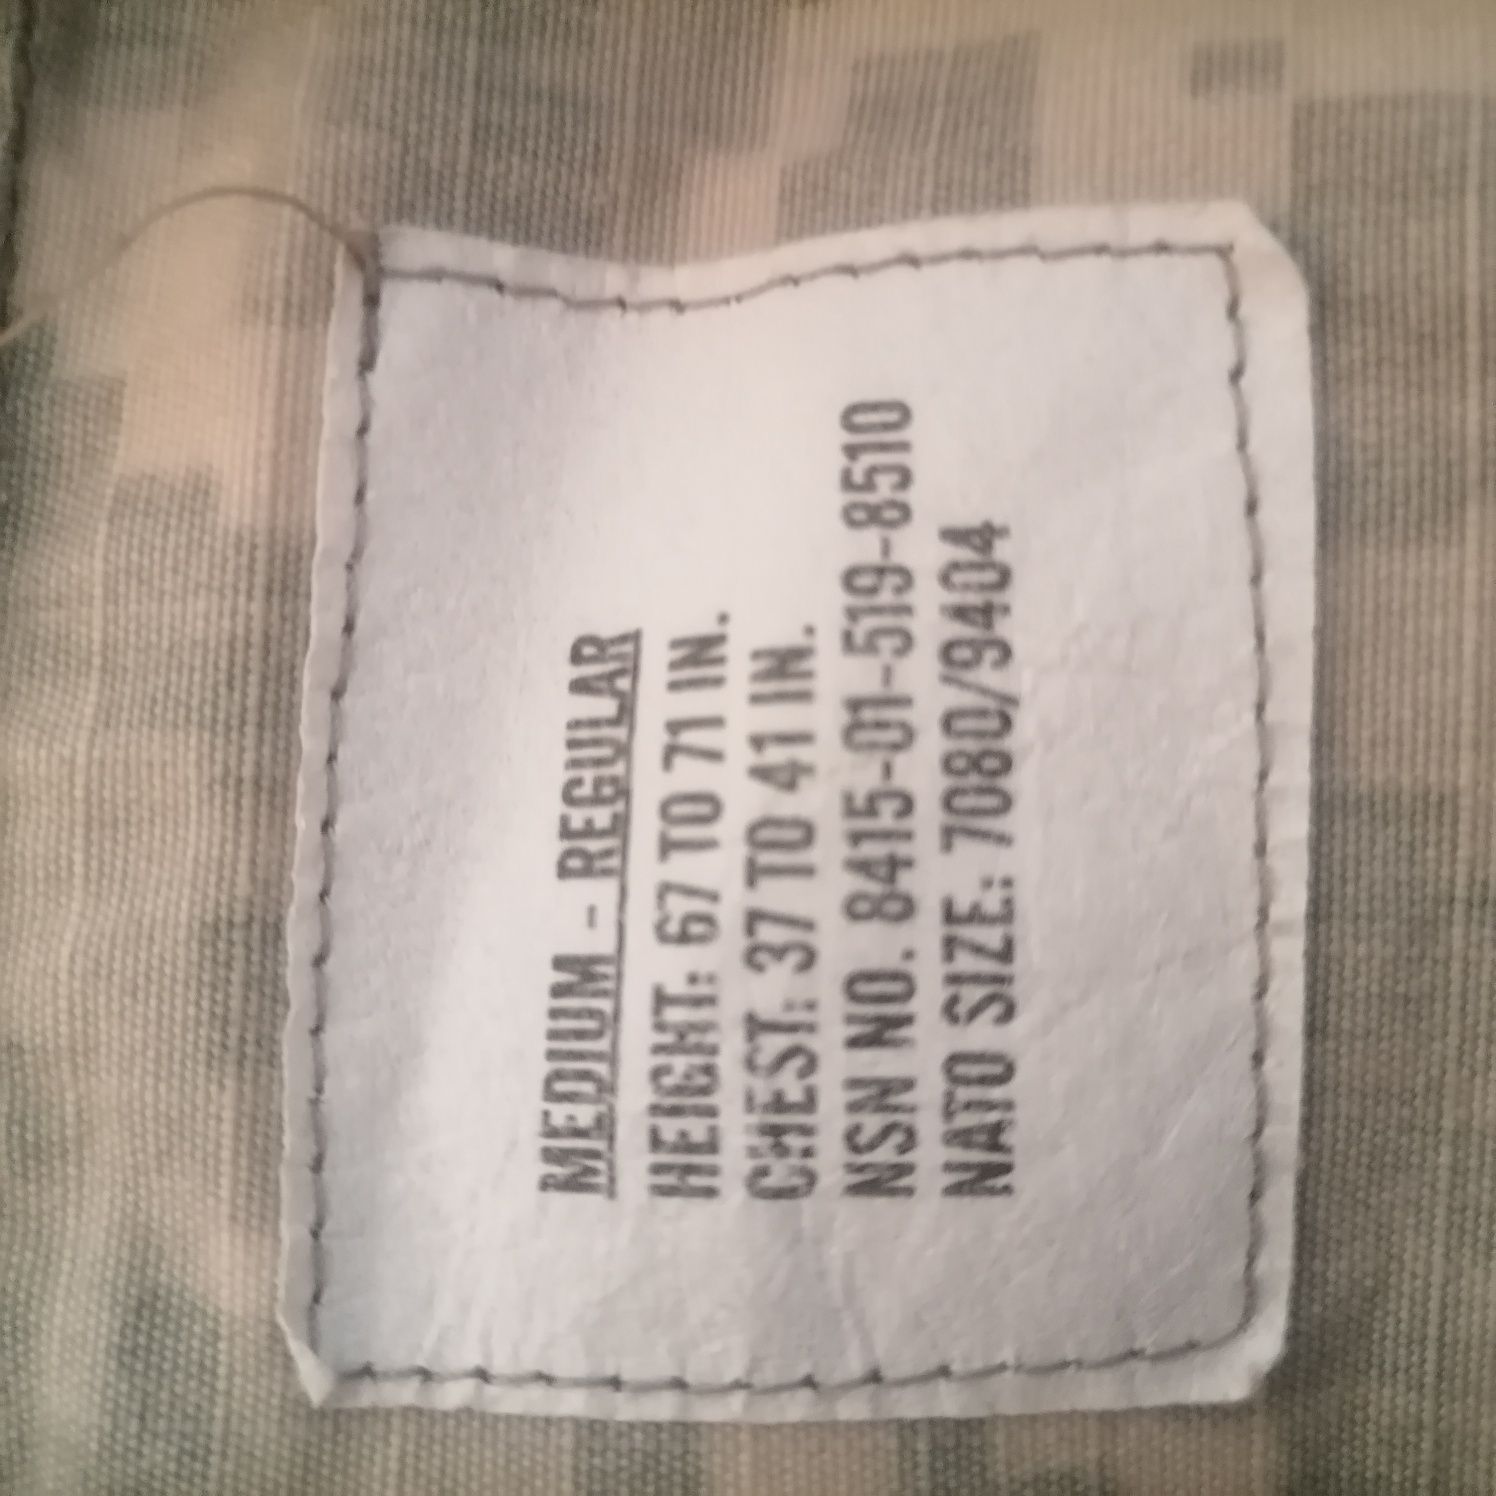 Bluza, koszula wojskowa  USA Army